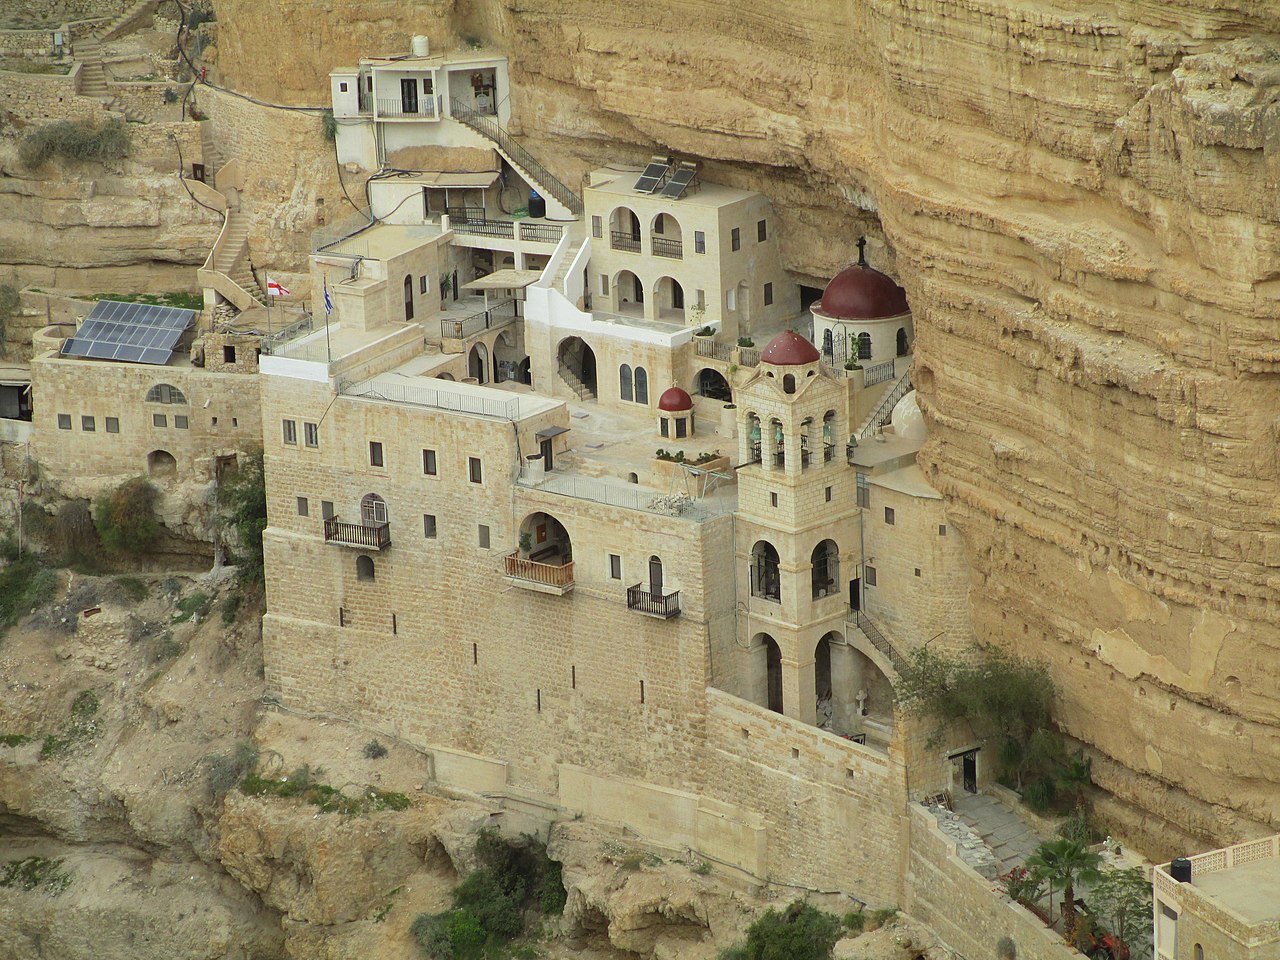 St George Monastery in Wadi Qelt